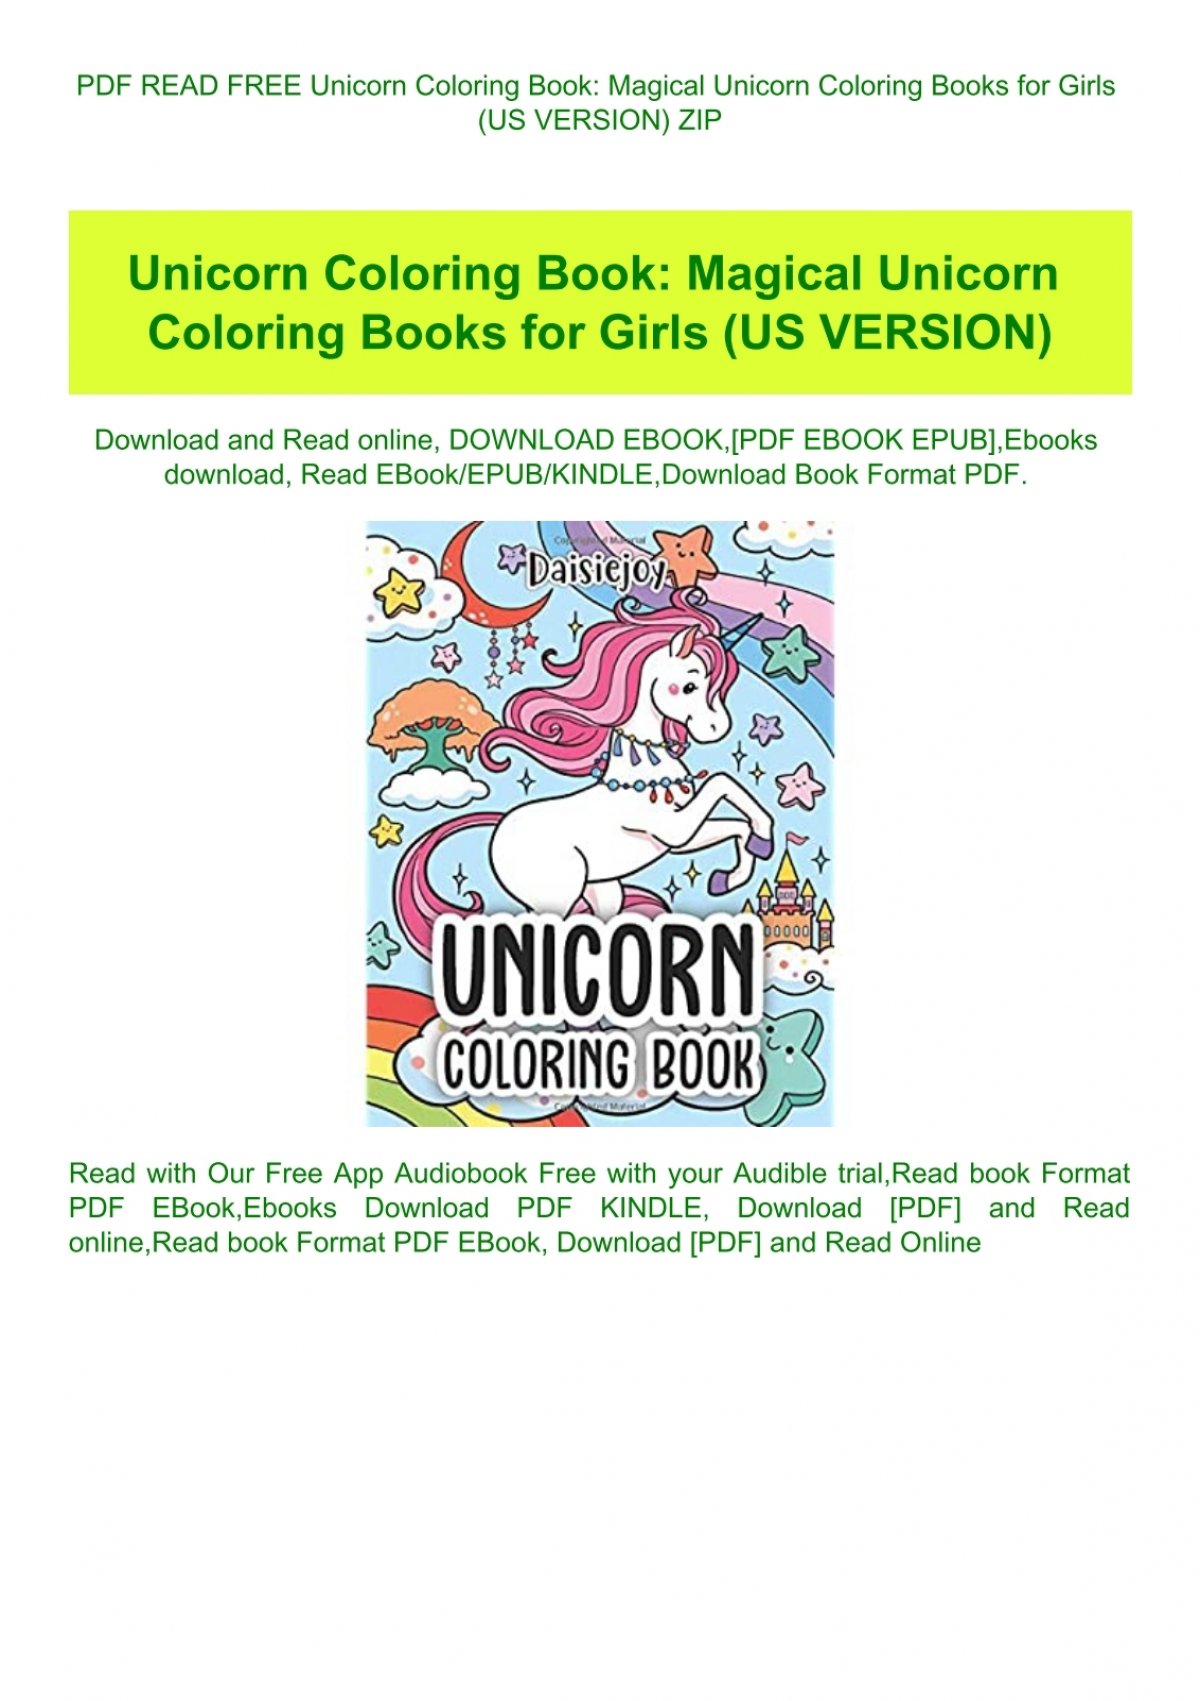 Download Pdf Read Free Unicorn Coloring Book Magical Unicorn Coloring Books For Girls Us Version Zip